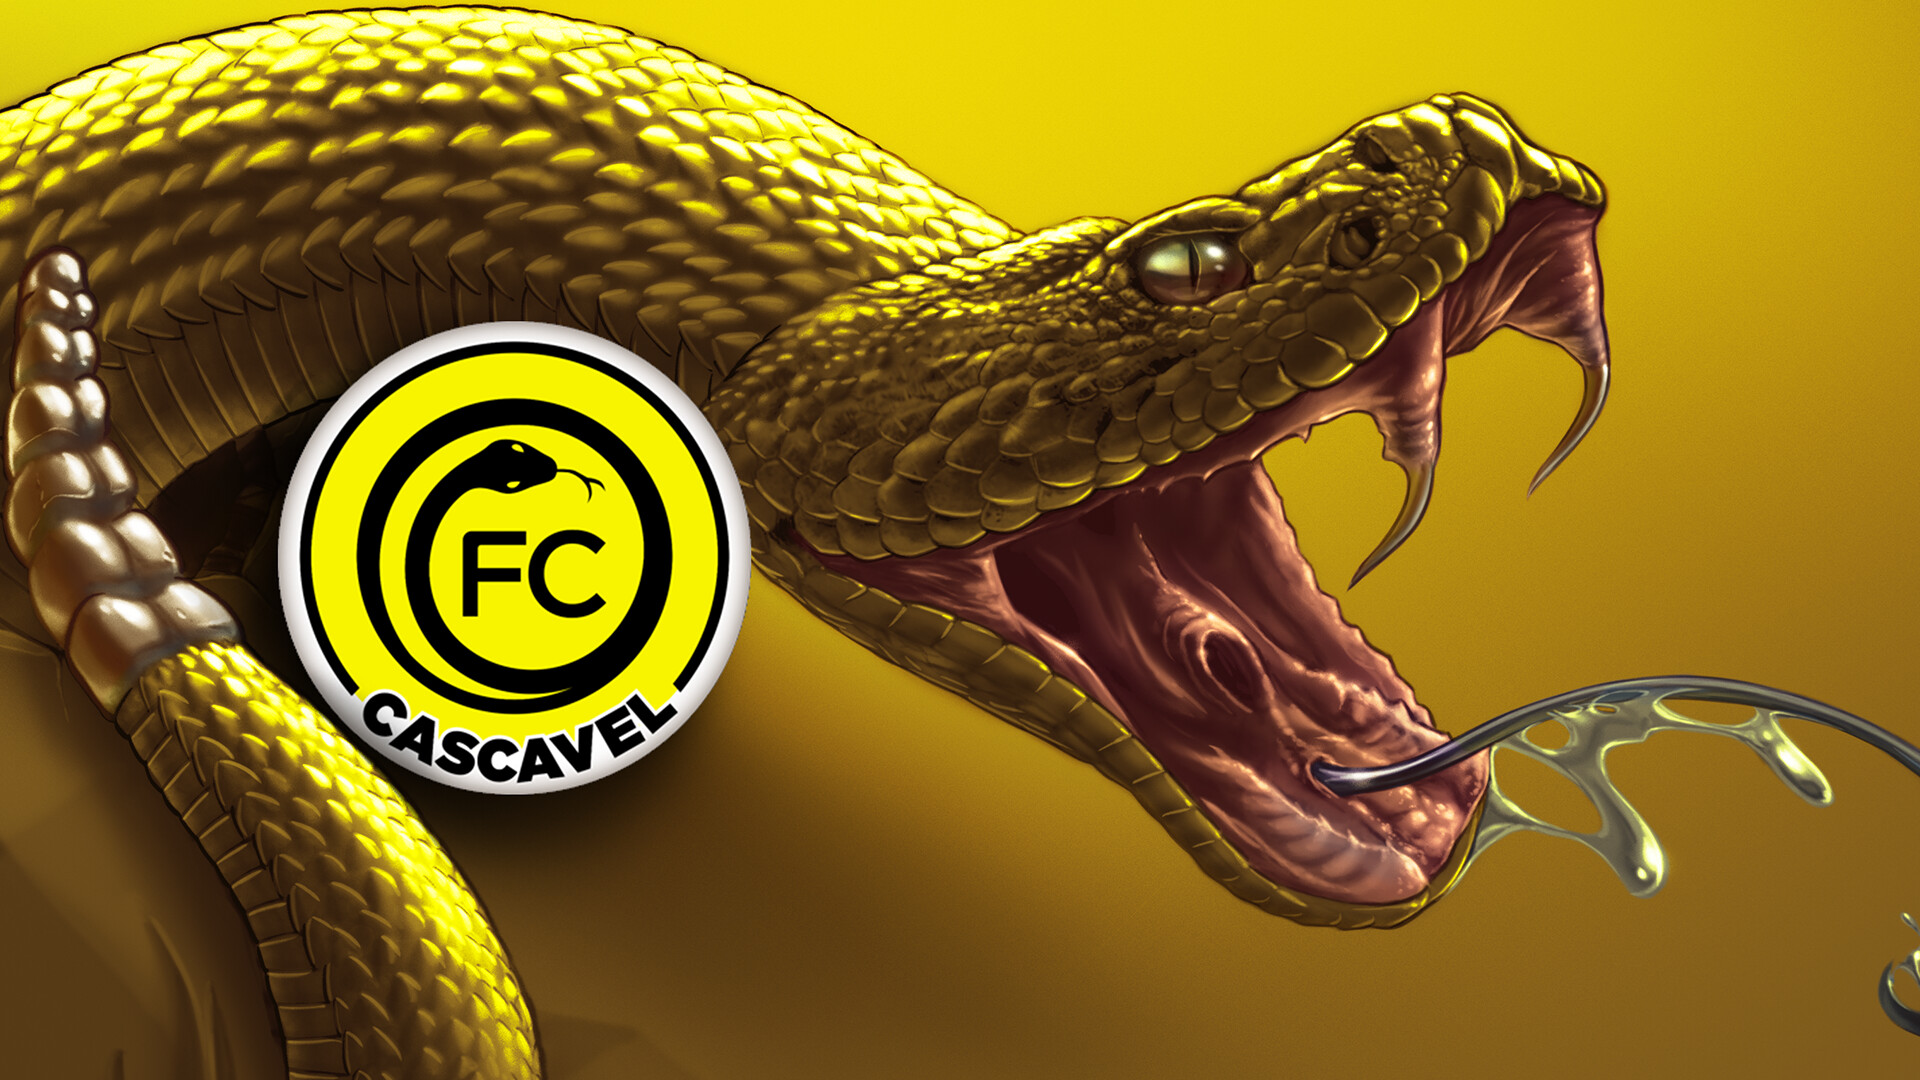 FC Cascavel - AMEXCOM